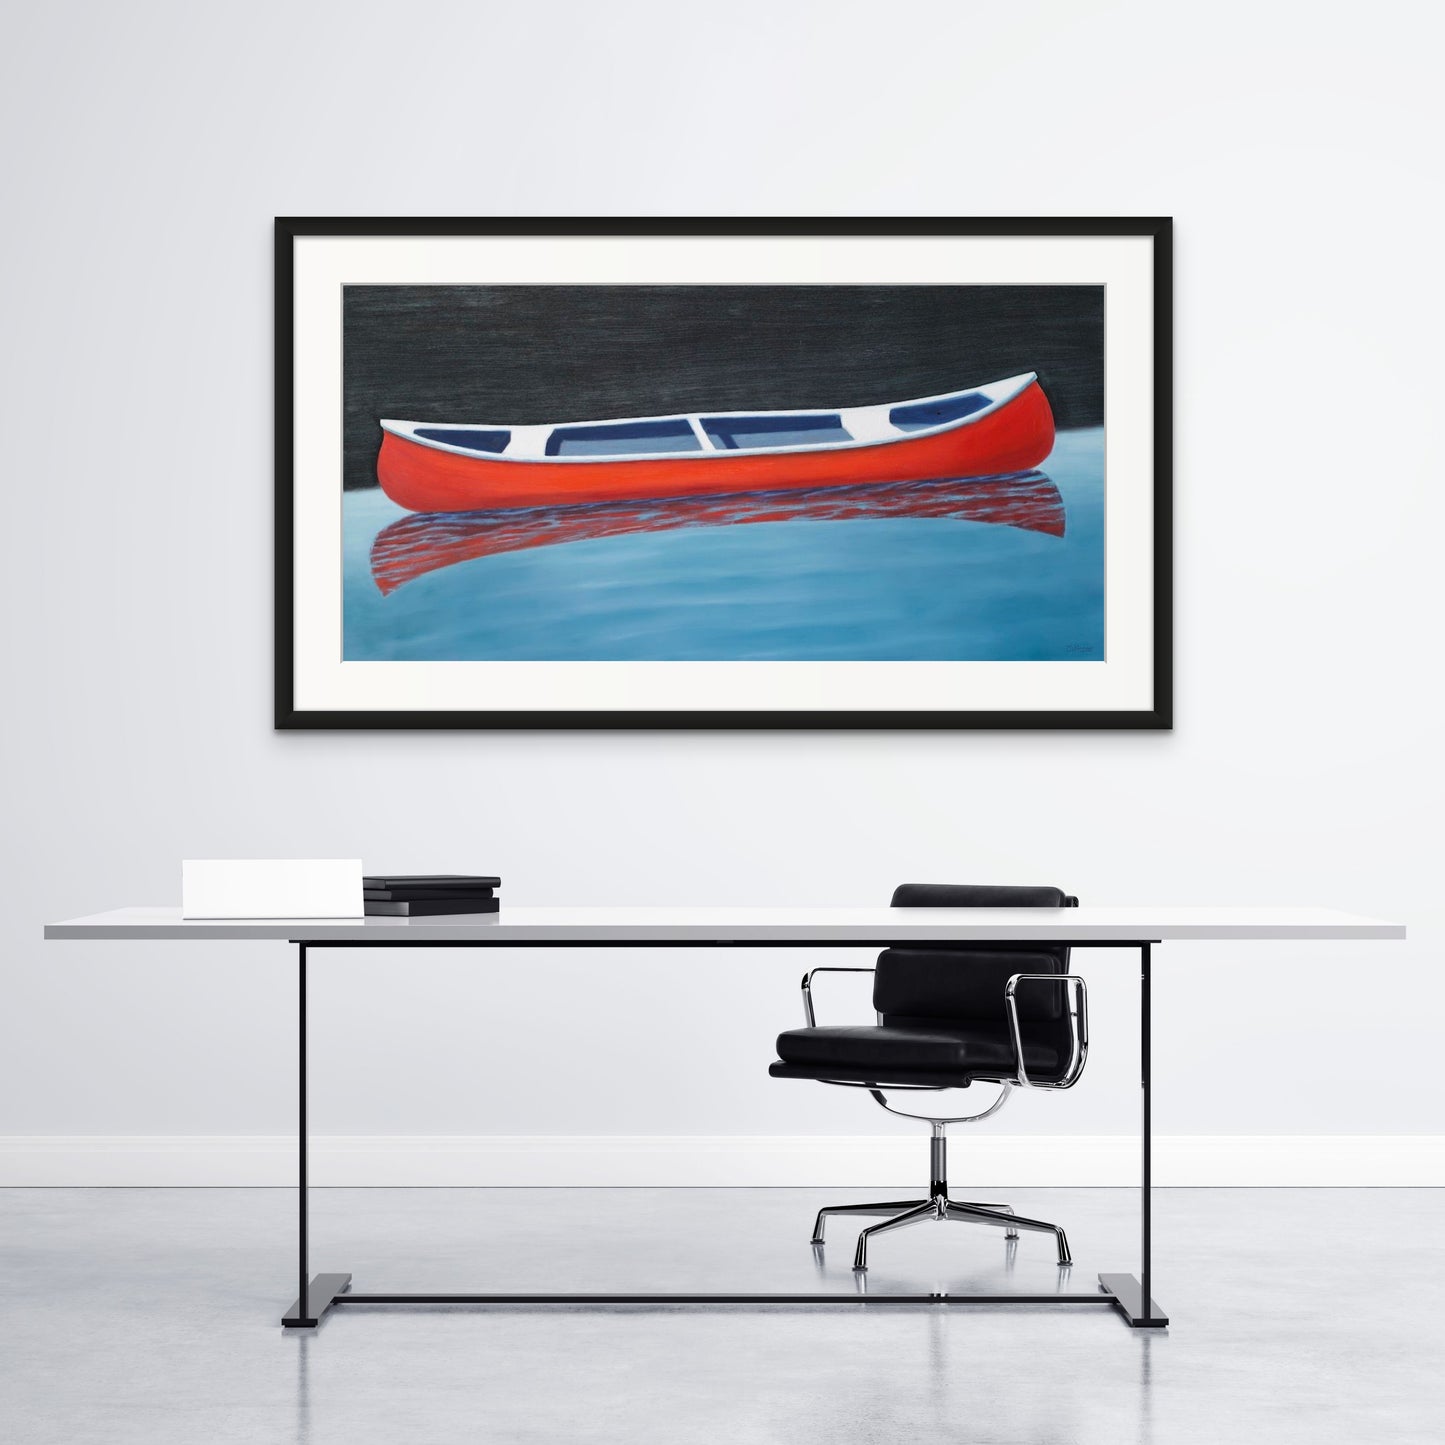 Canoe Wall Decor - Canvas Boat Print - Original Beach House Art